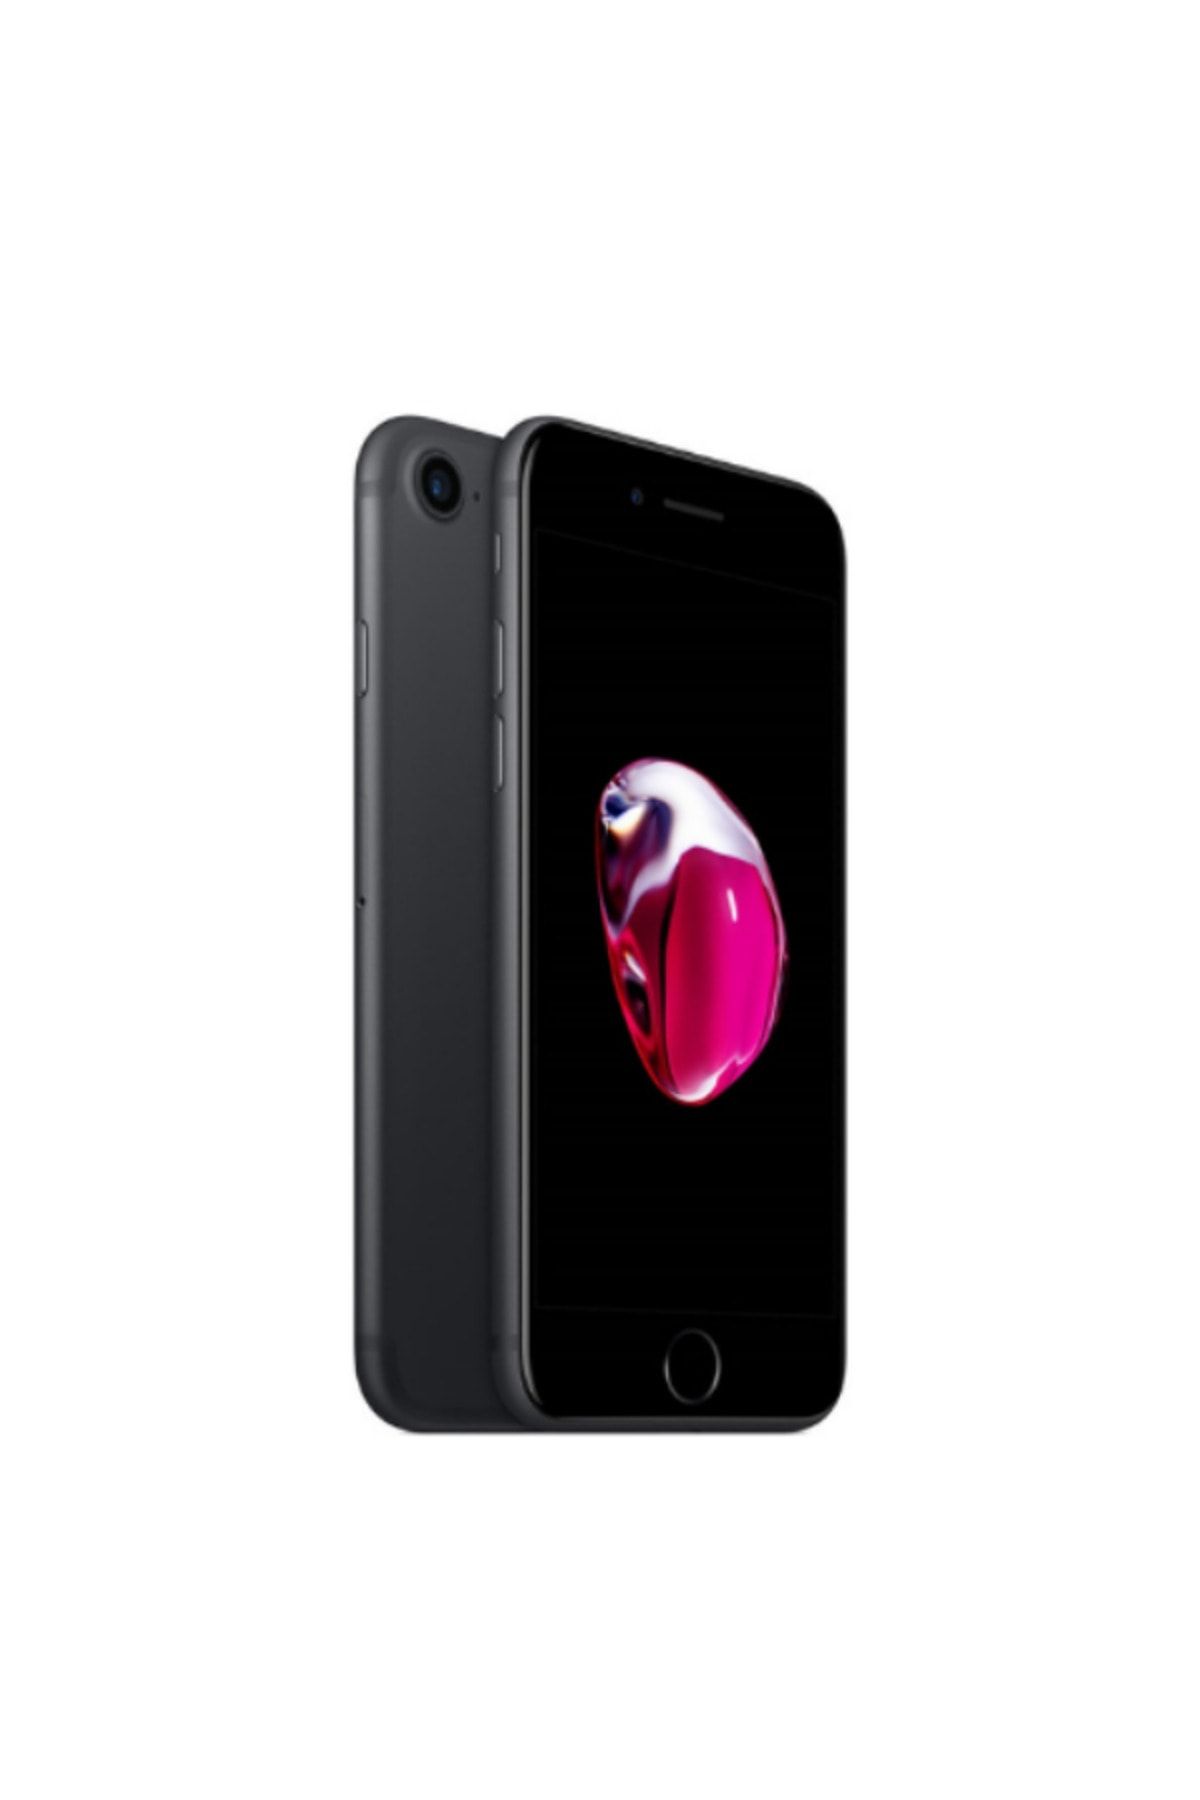 Apple Yenilenmiş iPhone 7 32 GB Siyah Cep Telefonu (12 Ay Garantili) - A Kalite